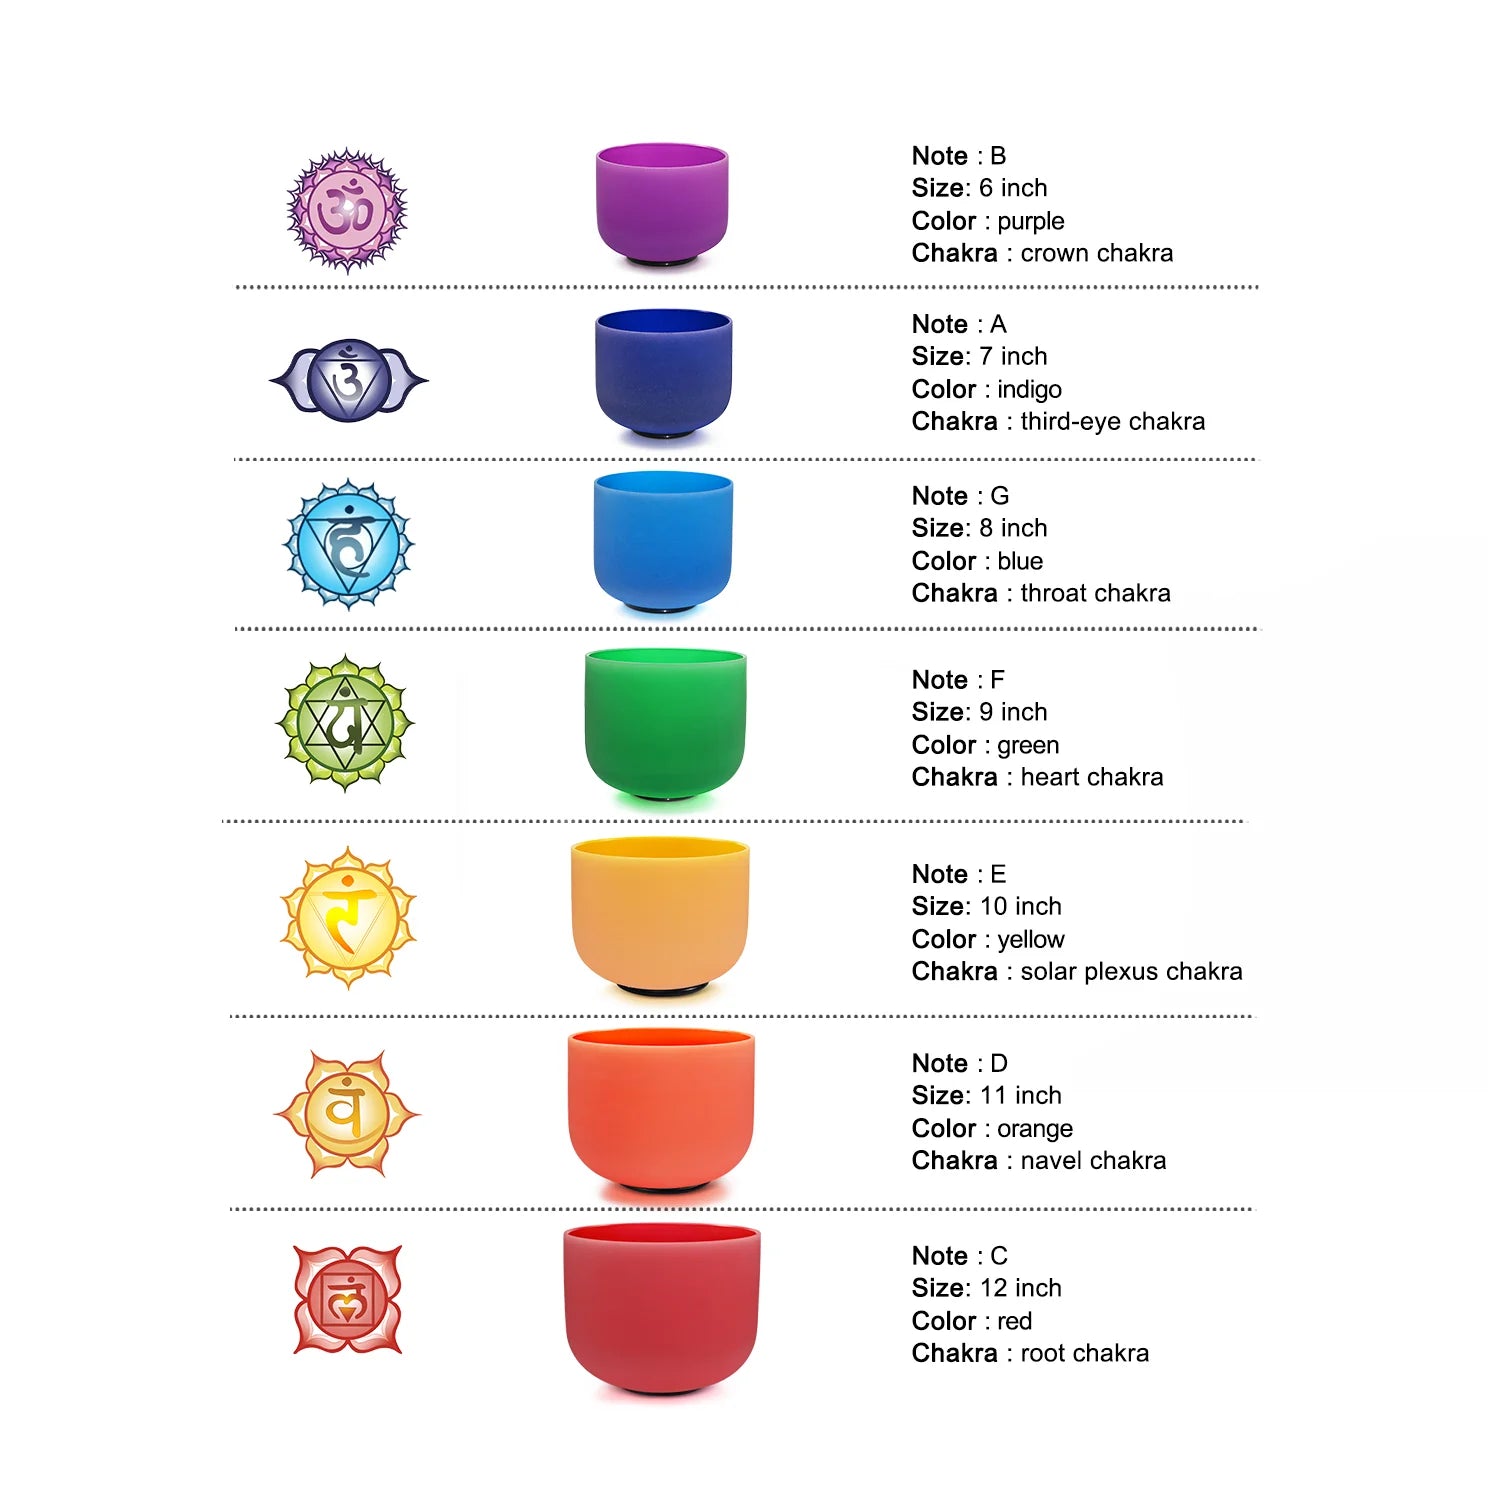 7-Piece Colored Crystal Singing Bowl Set for Meditation